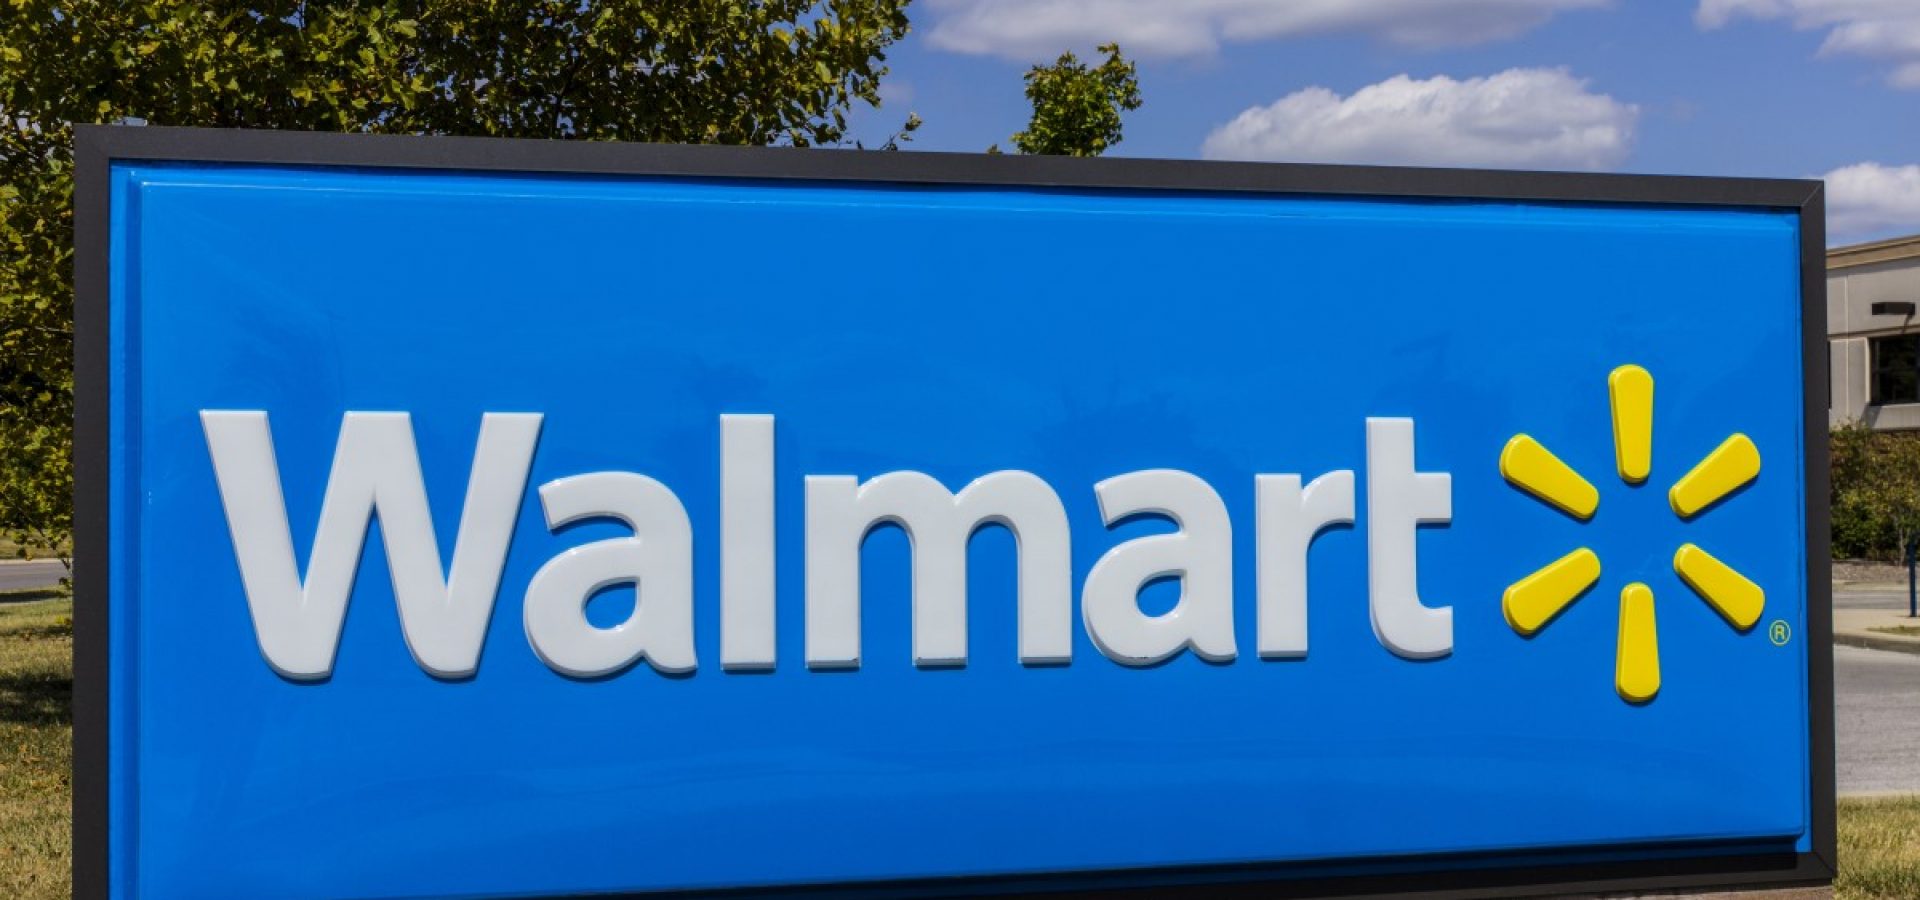 Walmart's shares on Thursday